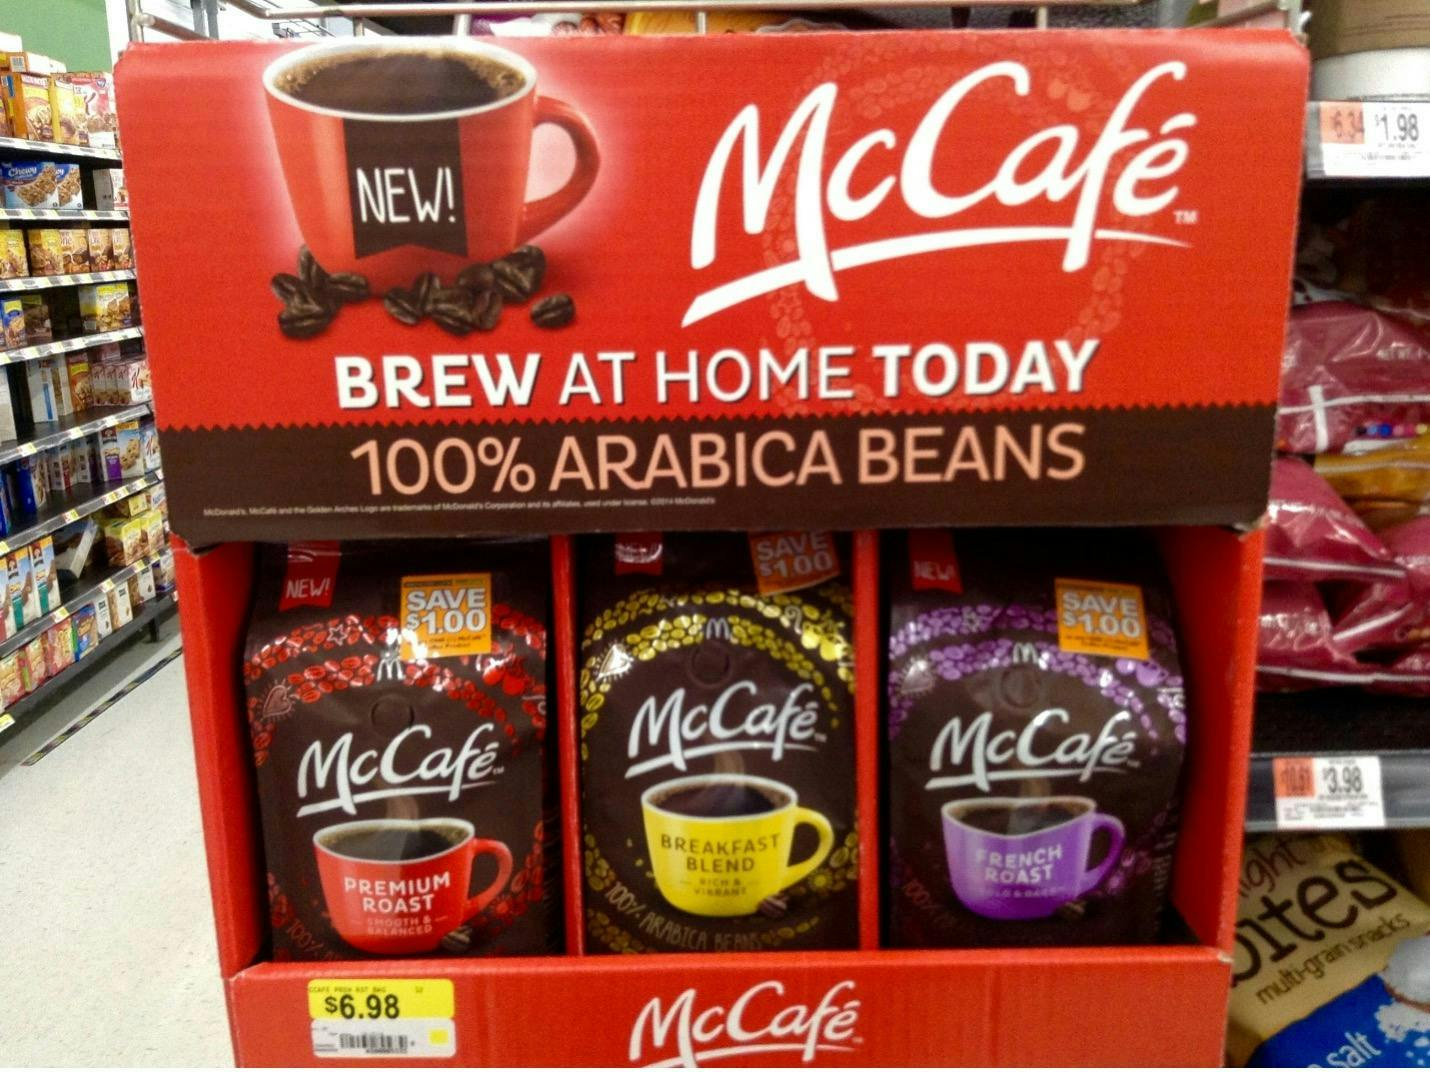 McCafe display stand.